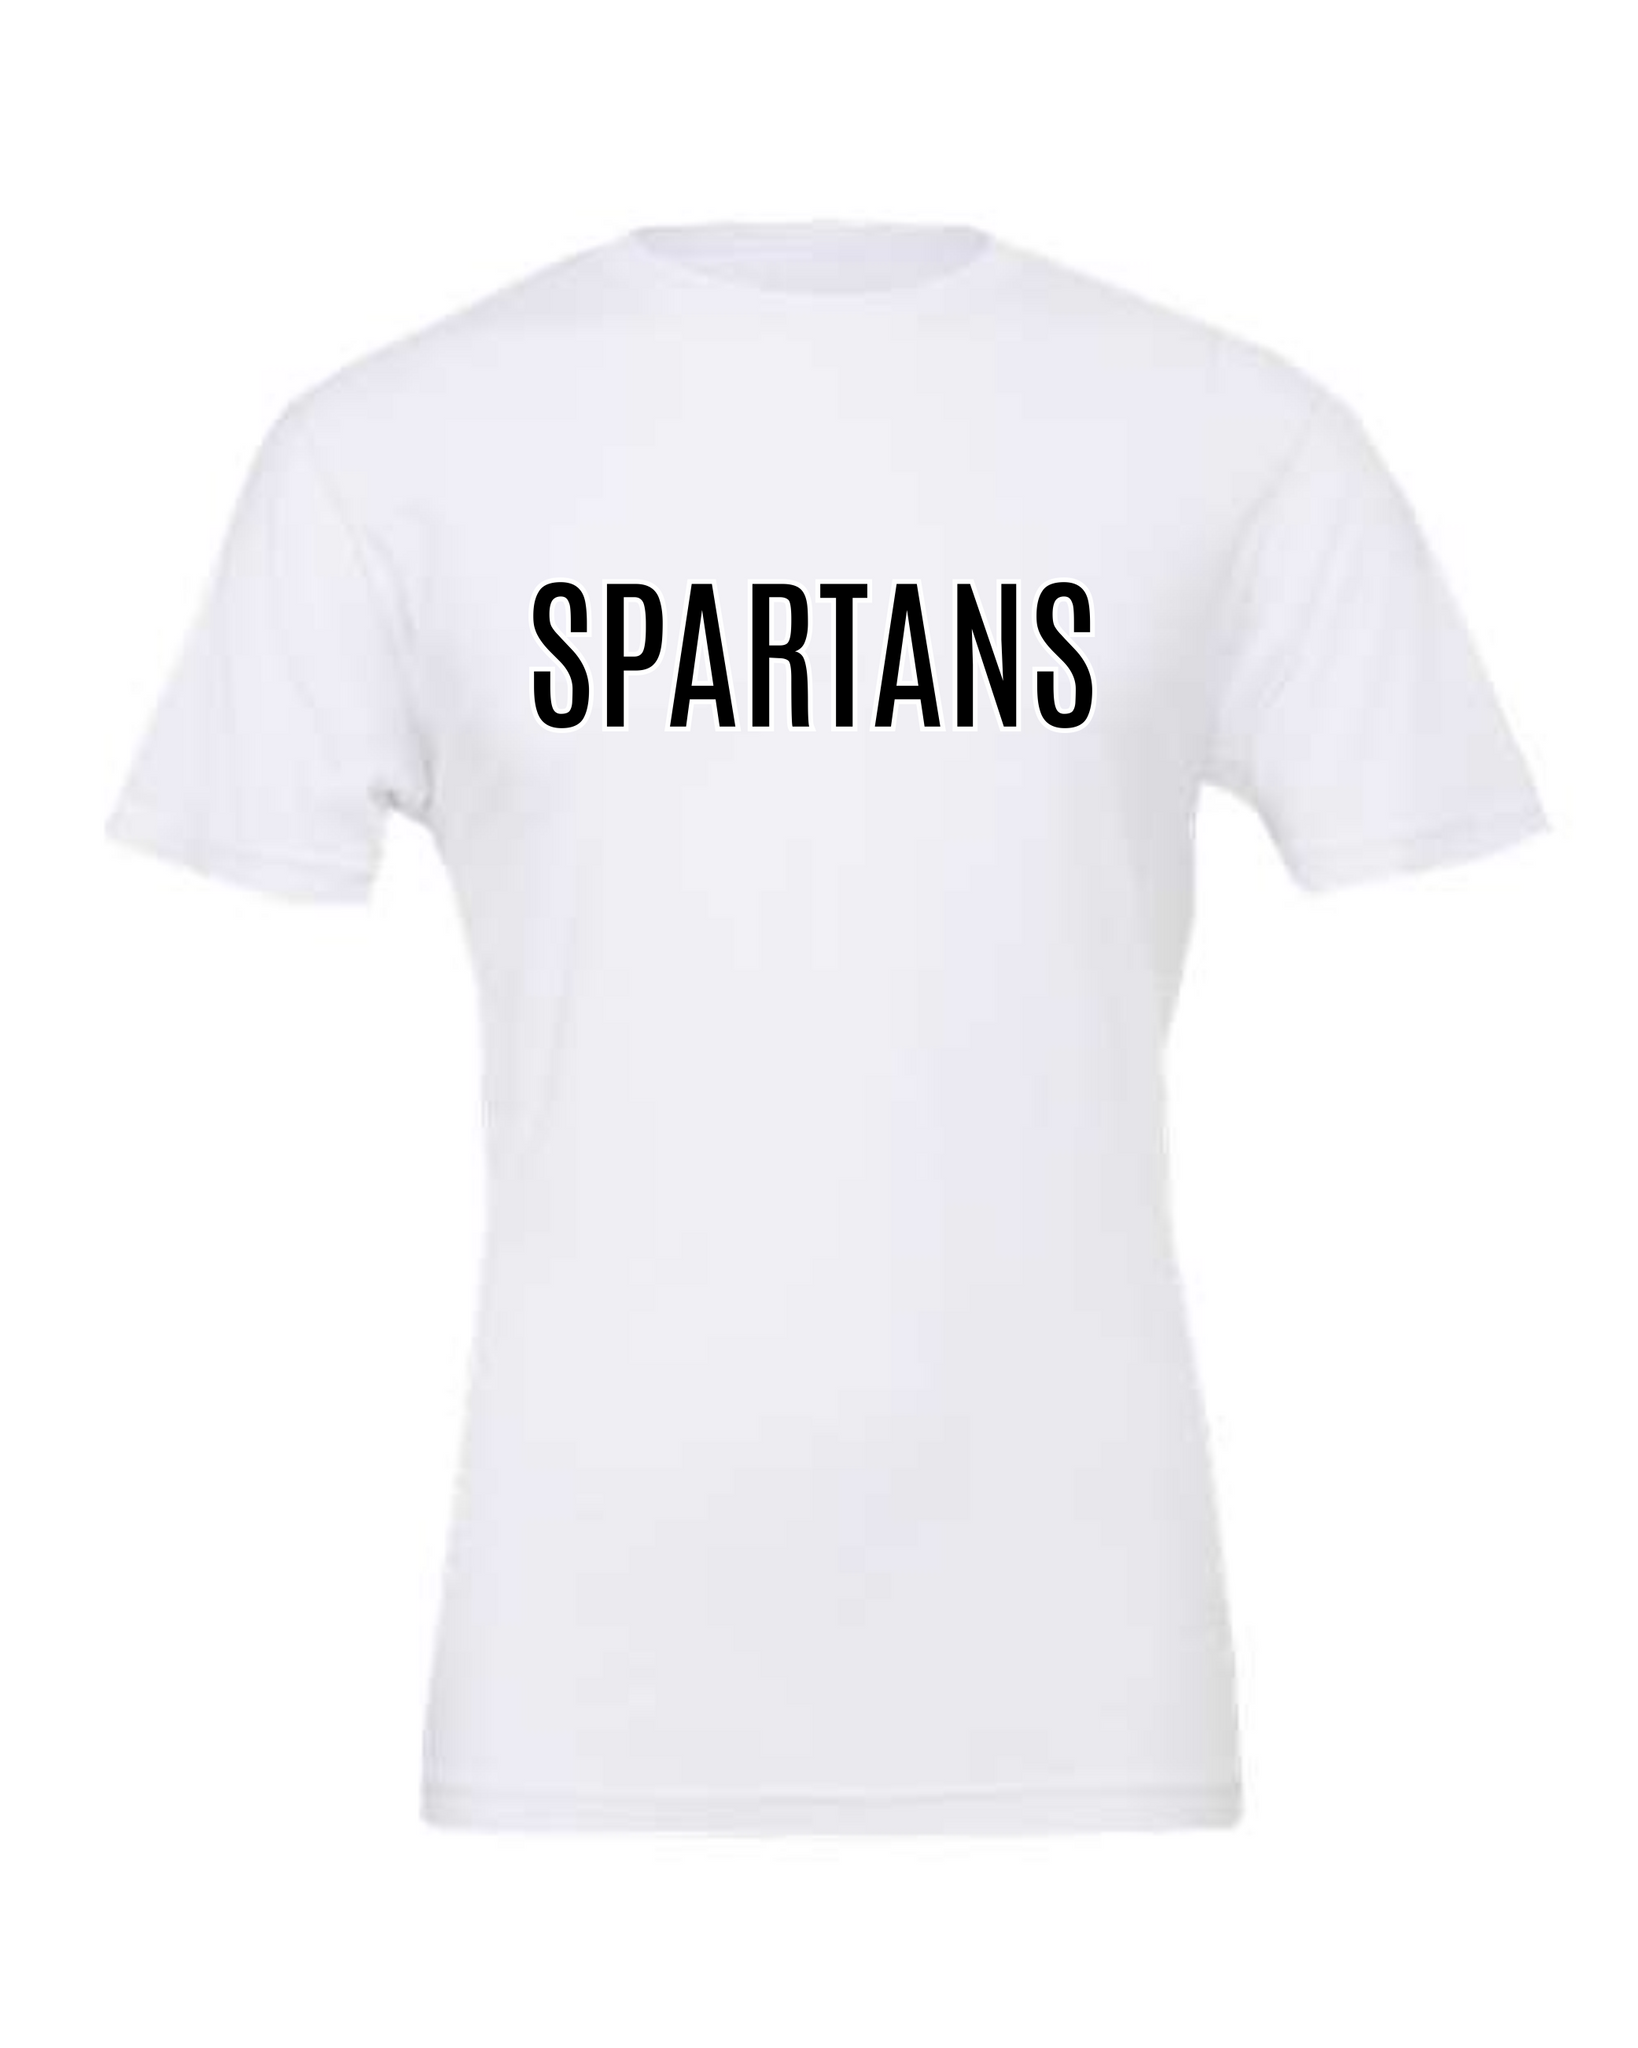 Block Spartans